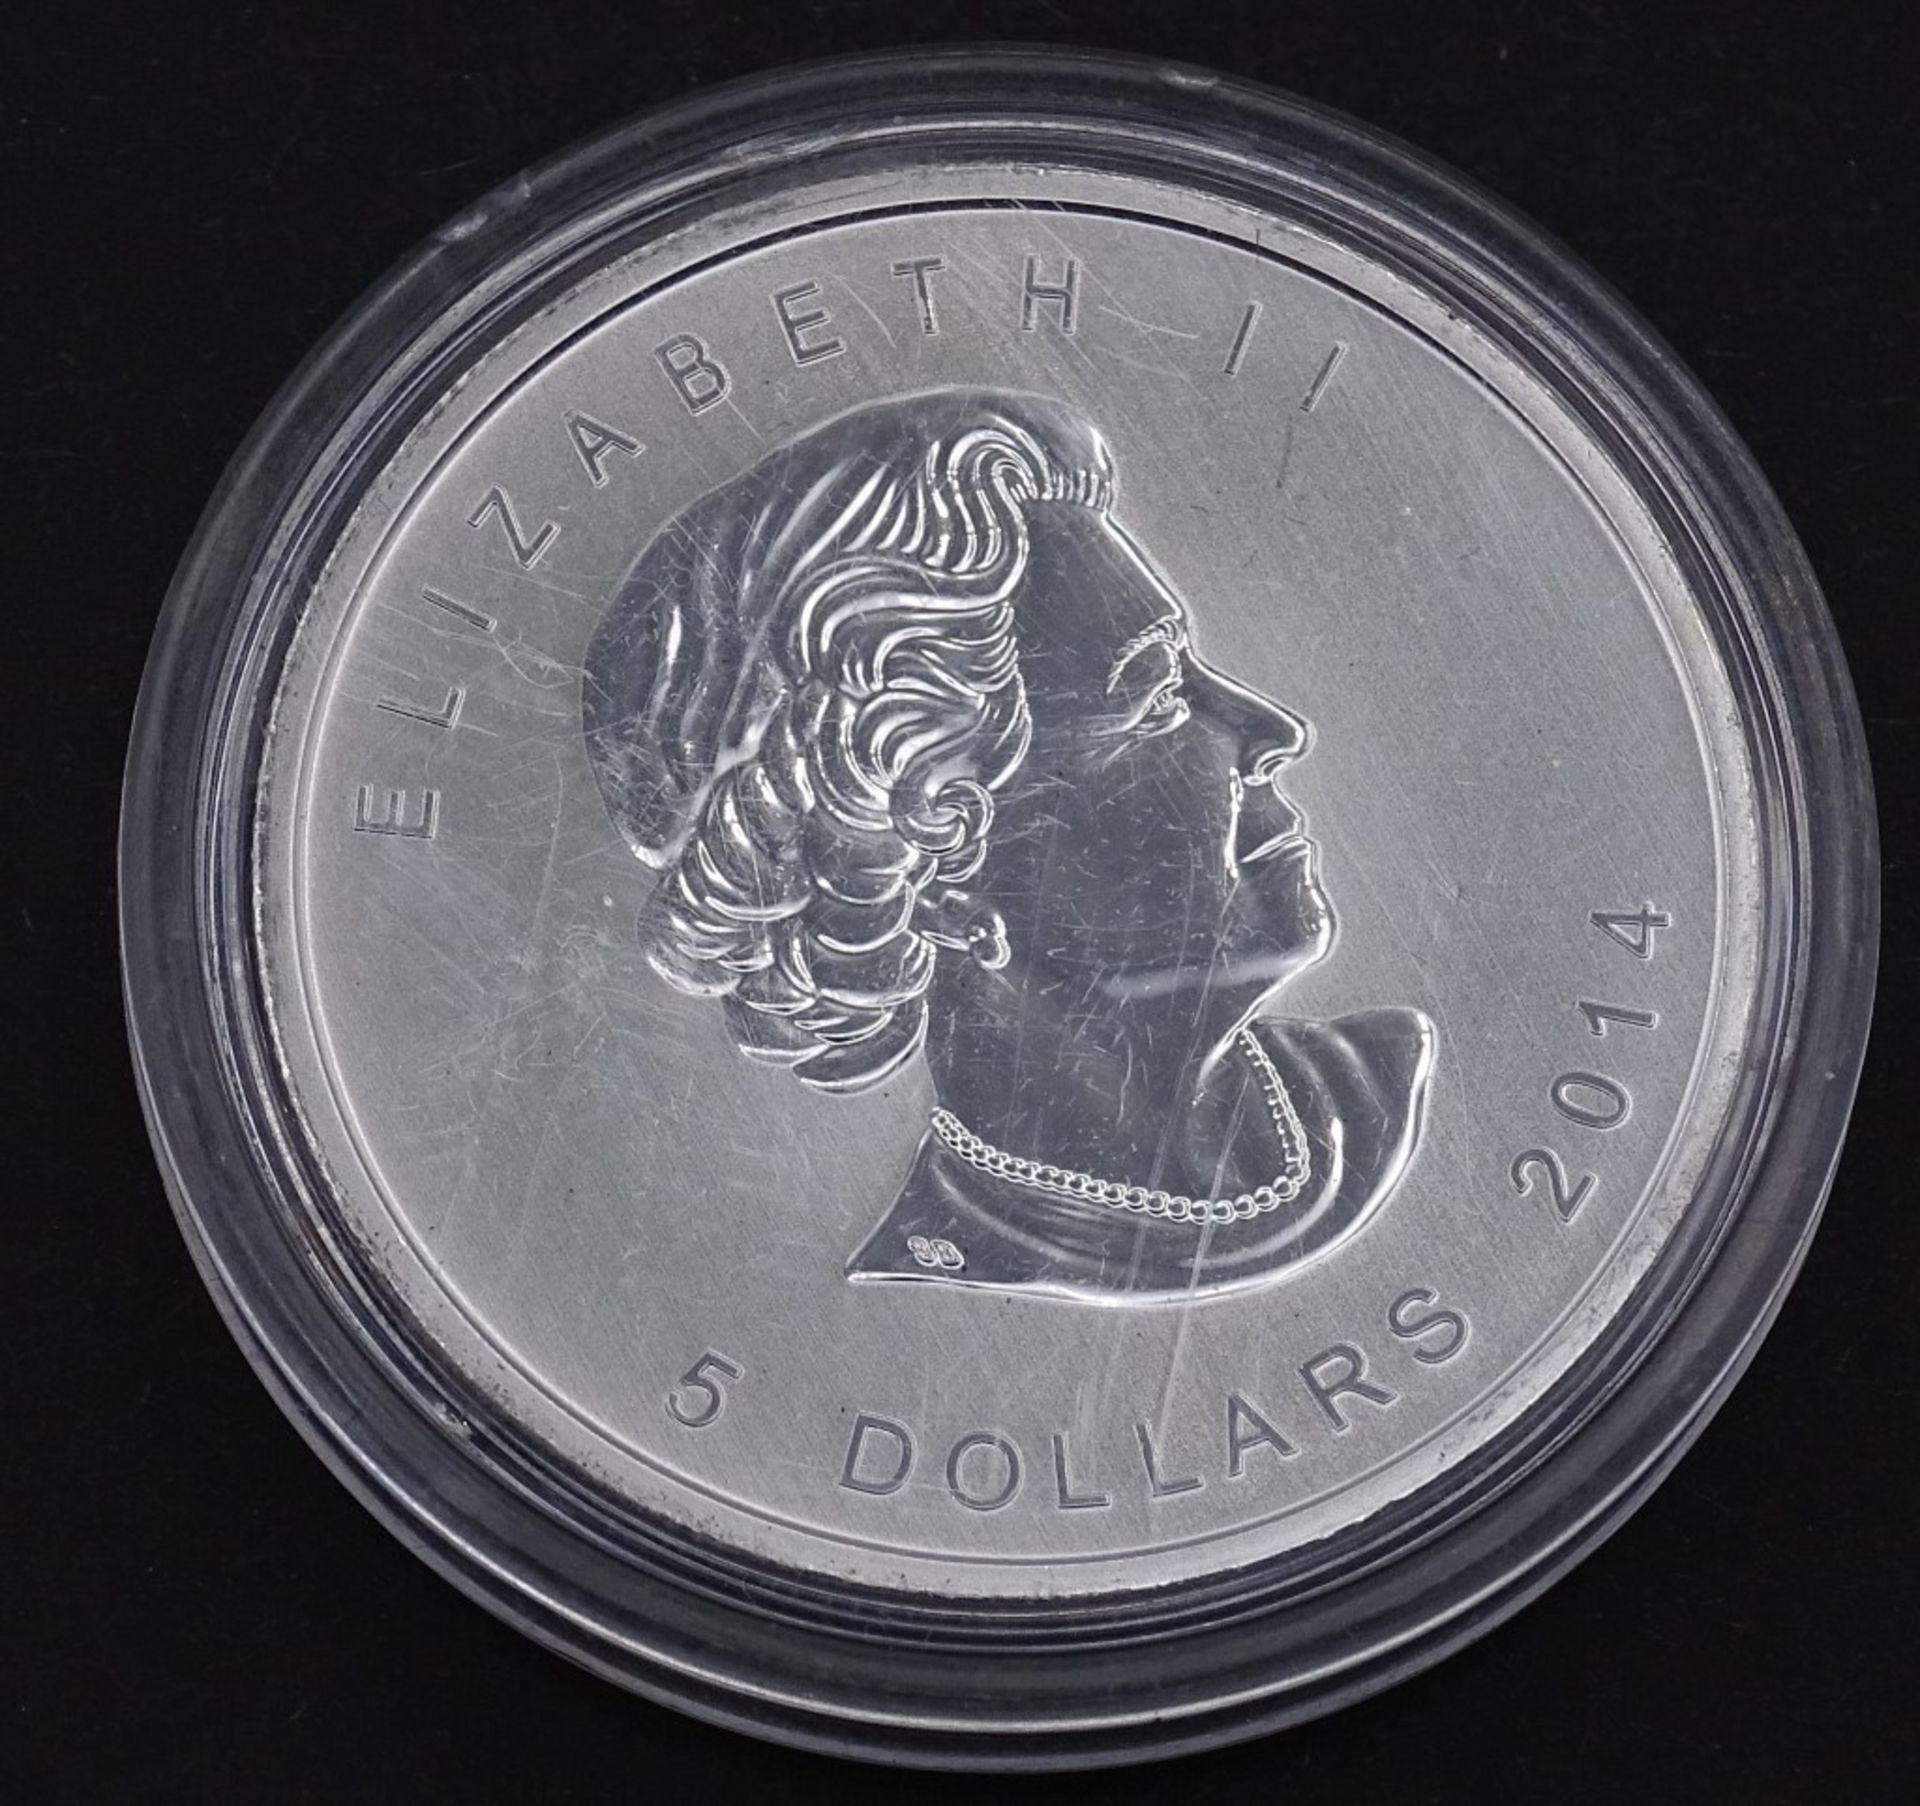 5 Dollars 2014 - Canada, 1 Oz Feinsilber 999/000, Elizabeth II, in Kapsel- - -22.61 % buyer's